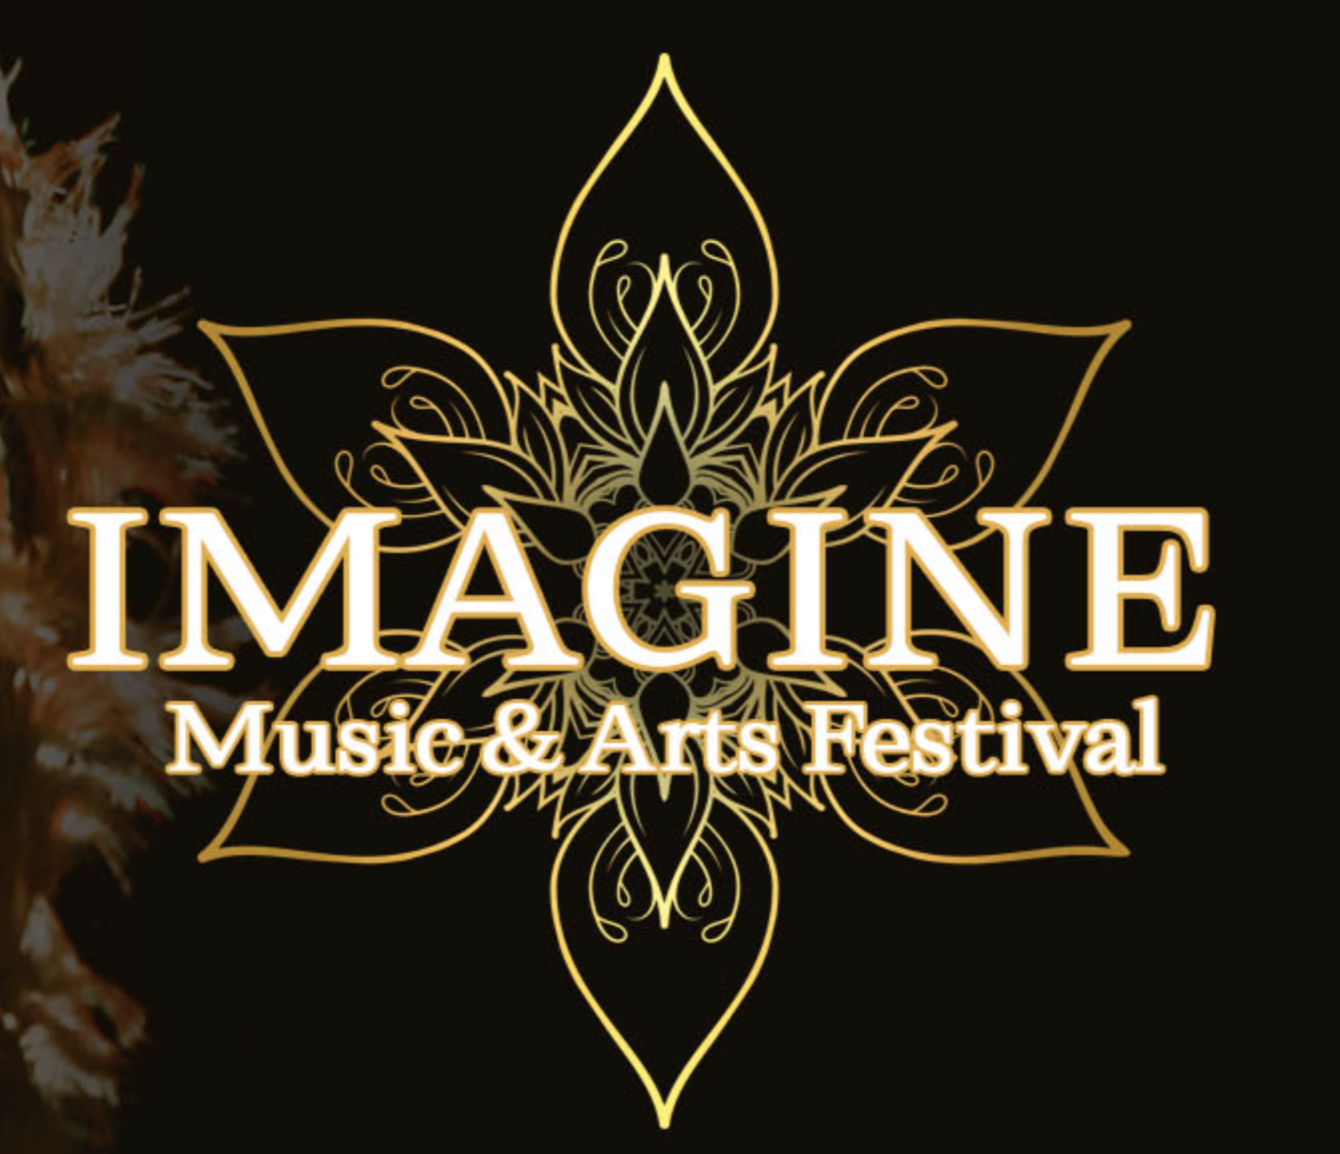 Imagine Arts and Music Festival